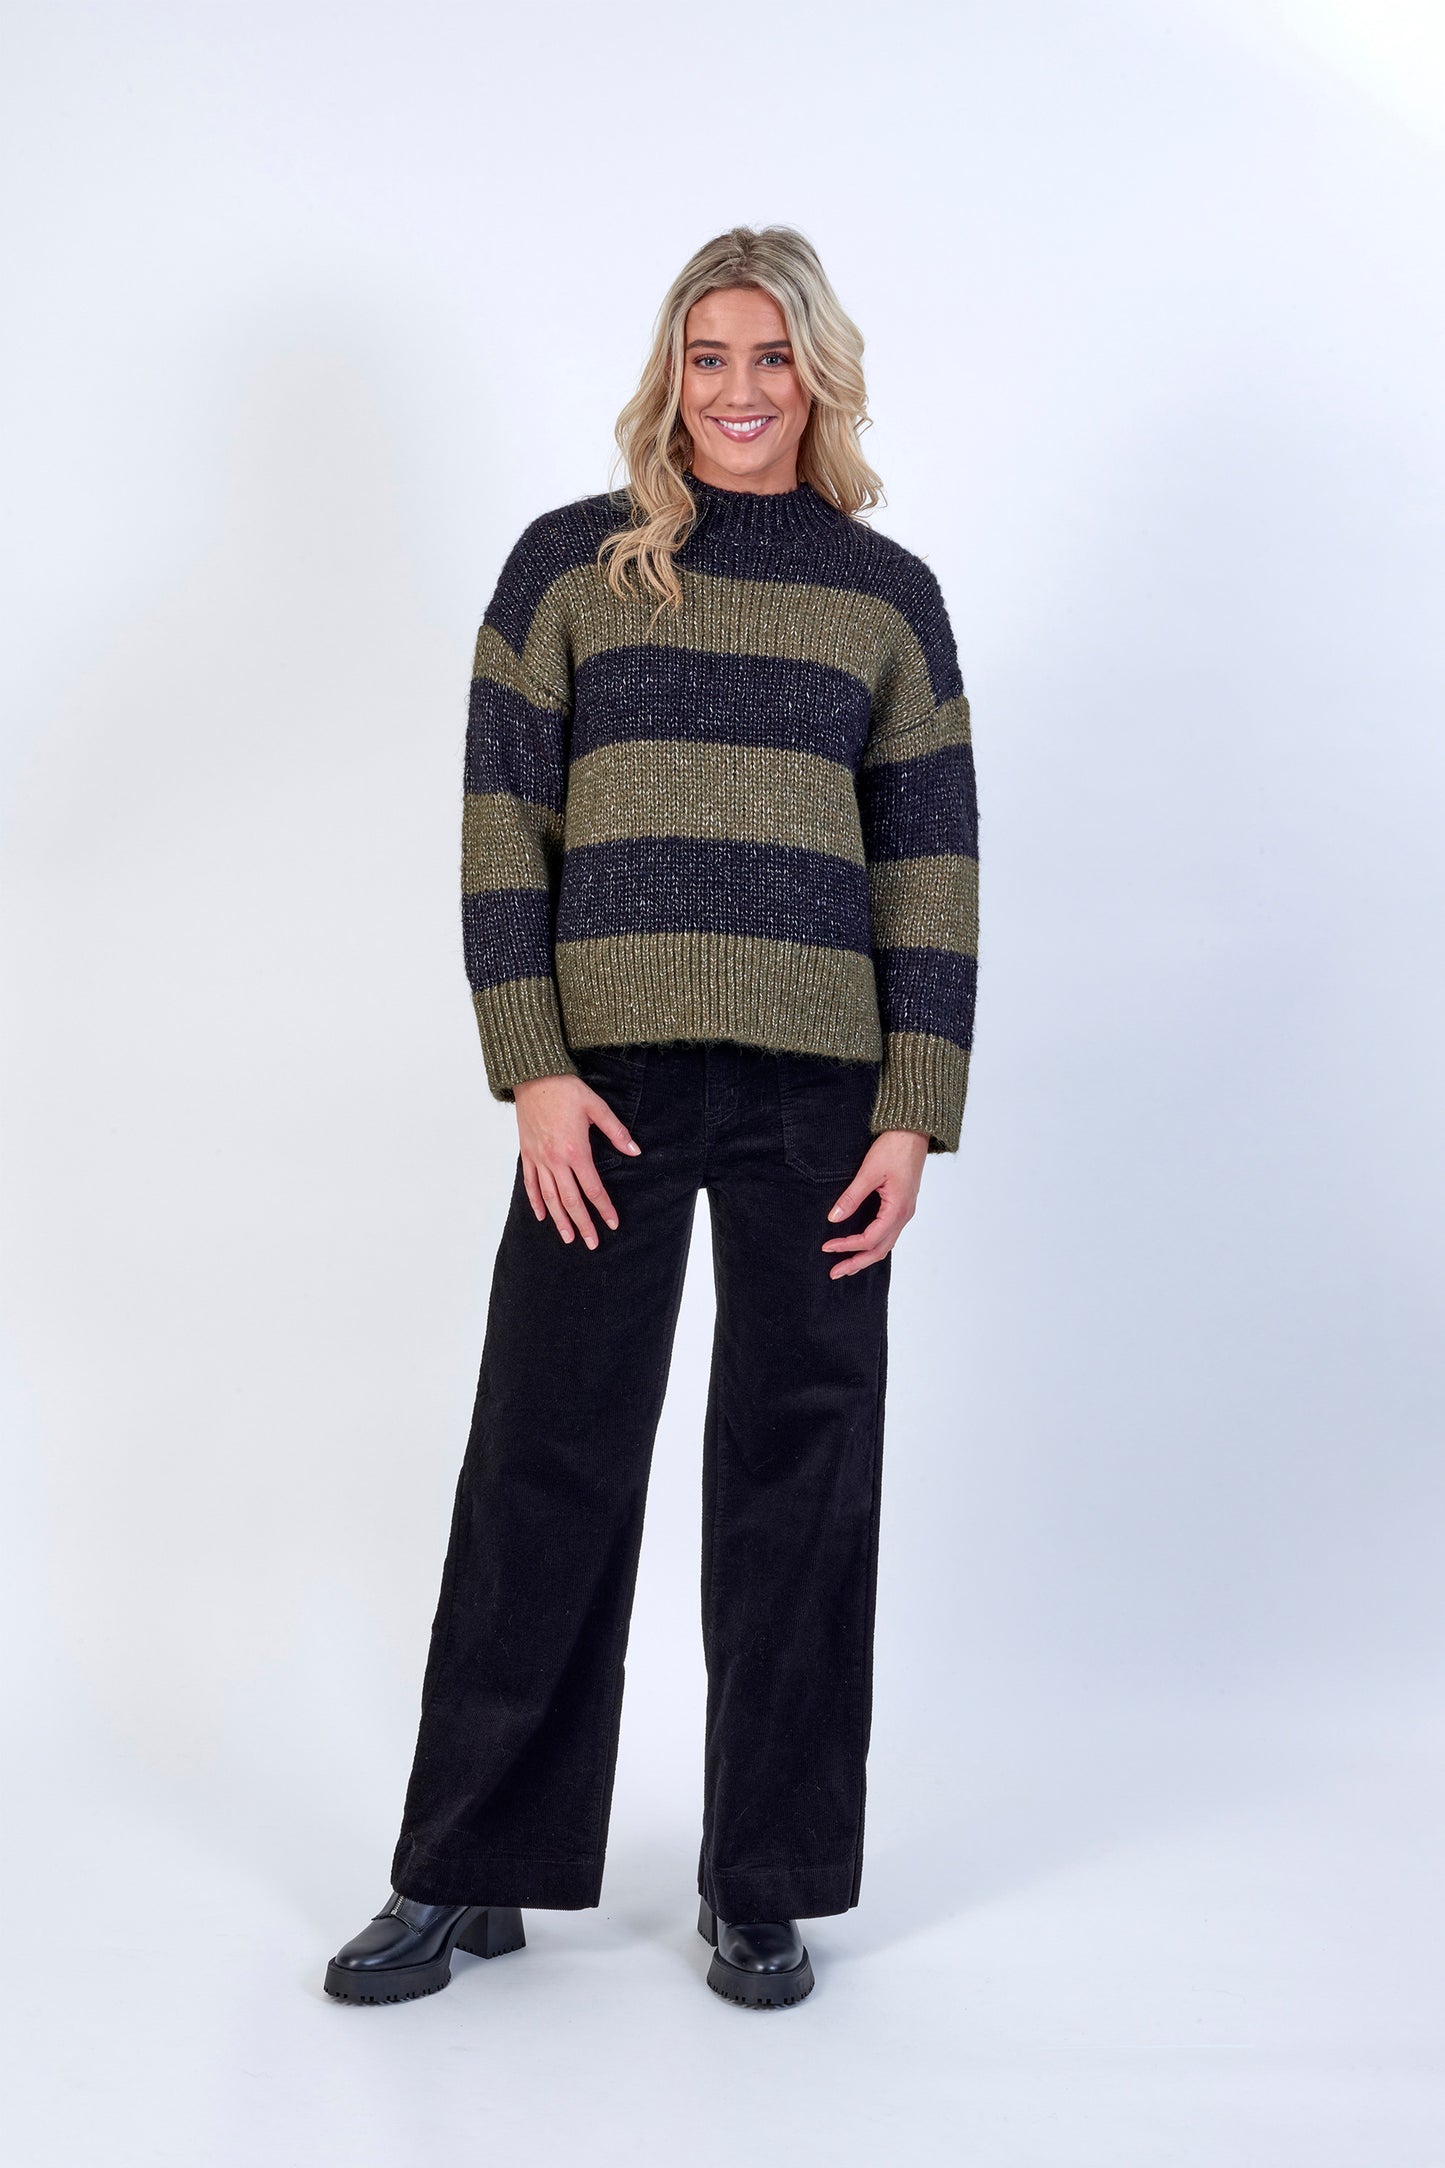 Knewe - Alexa Sweater - K2025 - Khaki/Black - INSTORE